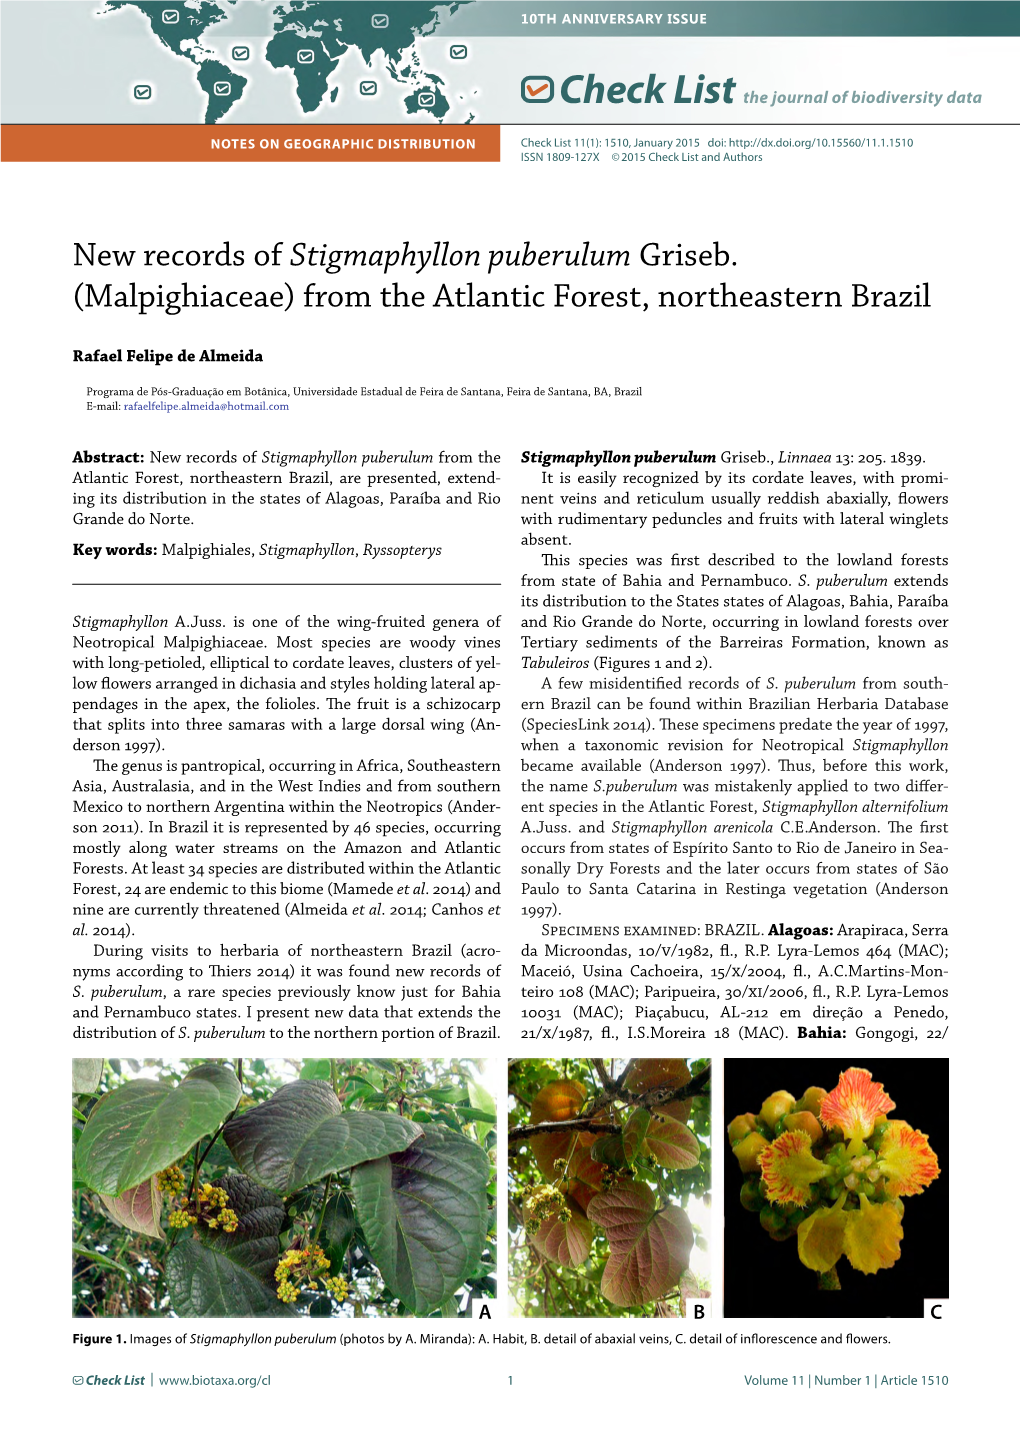 New Records of Stigmaphyllon Puberulum Griseb. (Malpighiaceae) from the Atlantic Forest, Northeastern Brazil